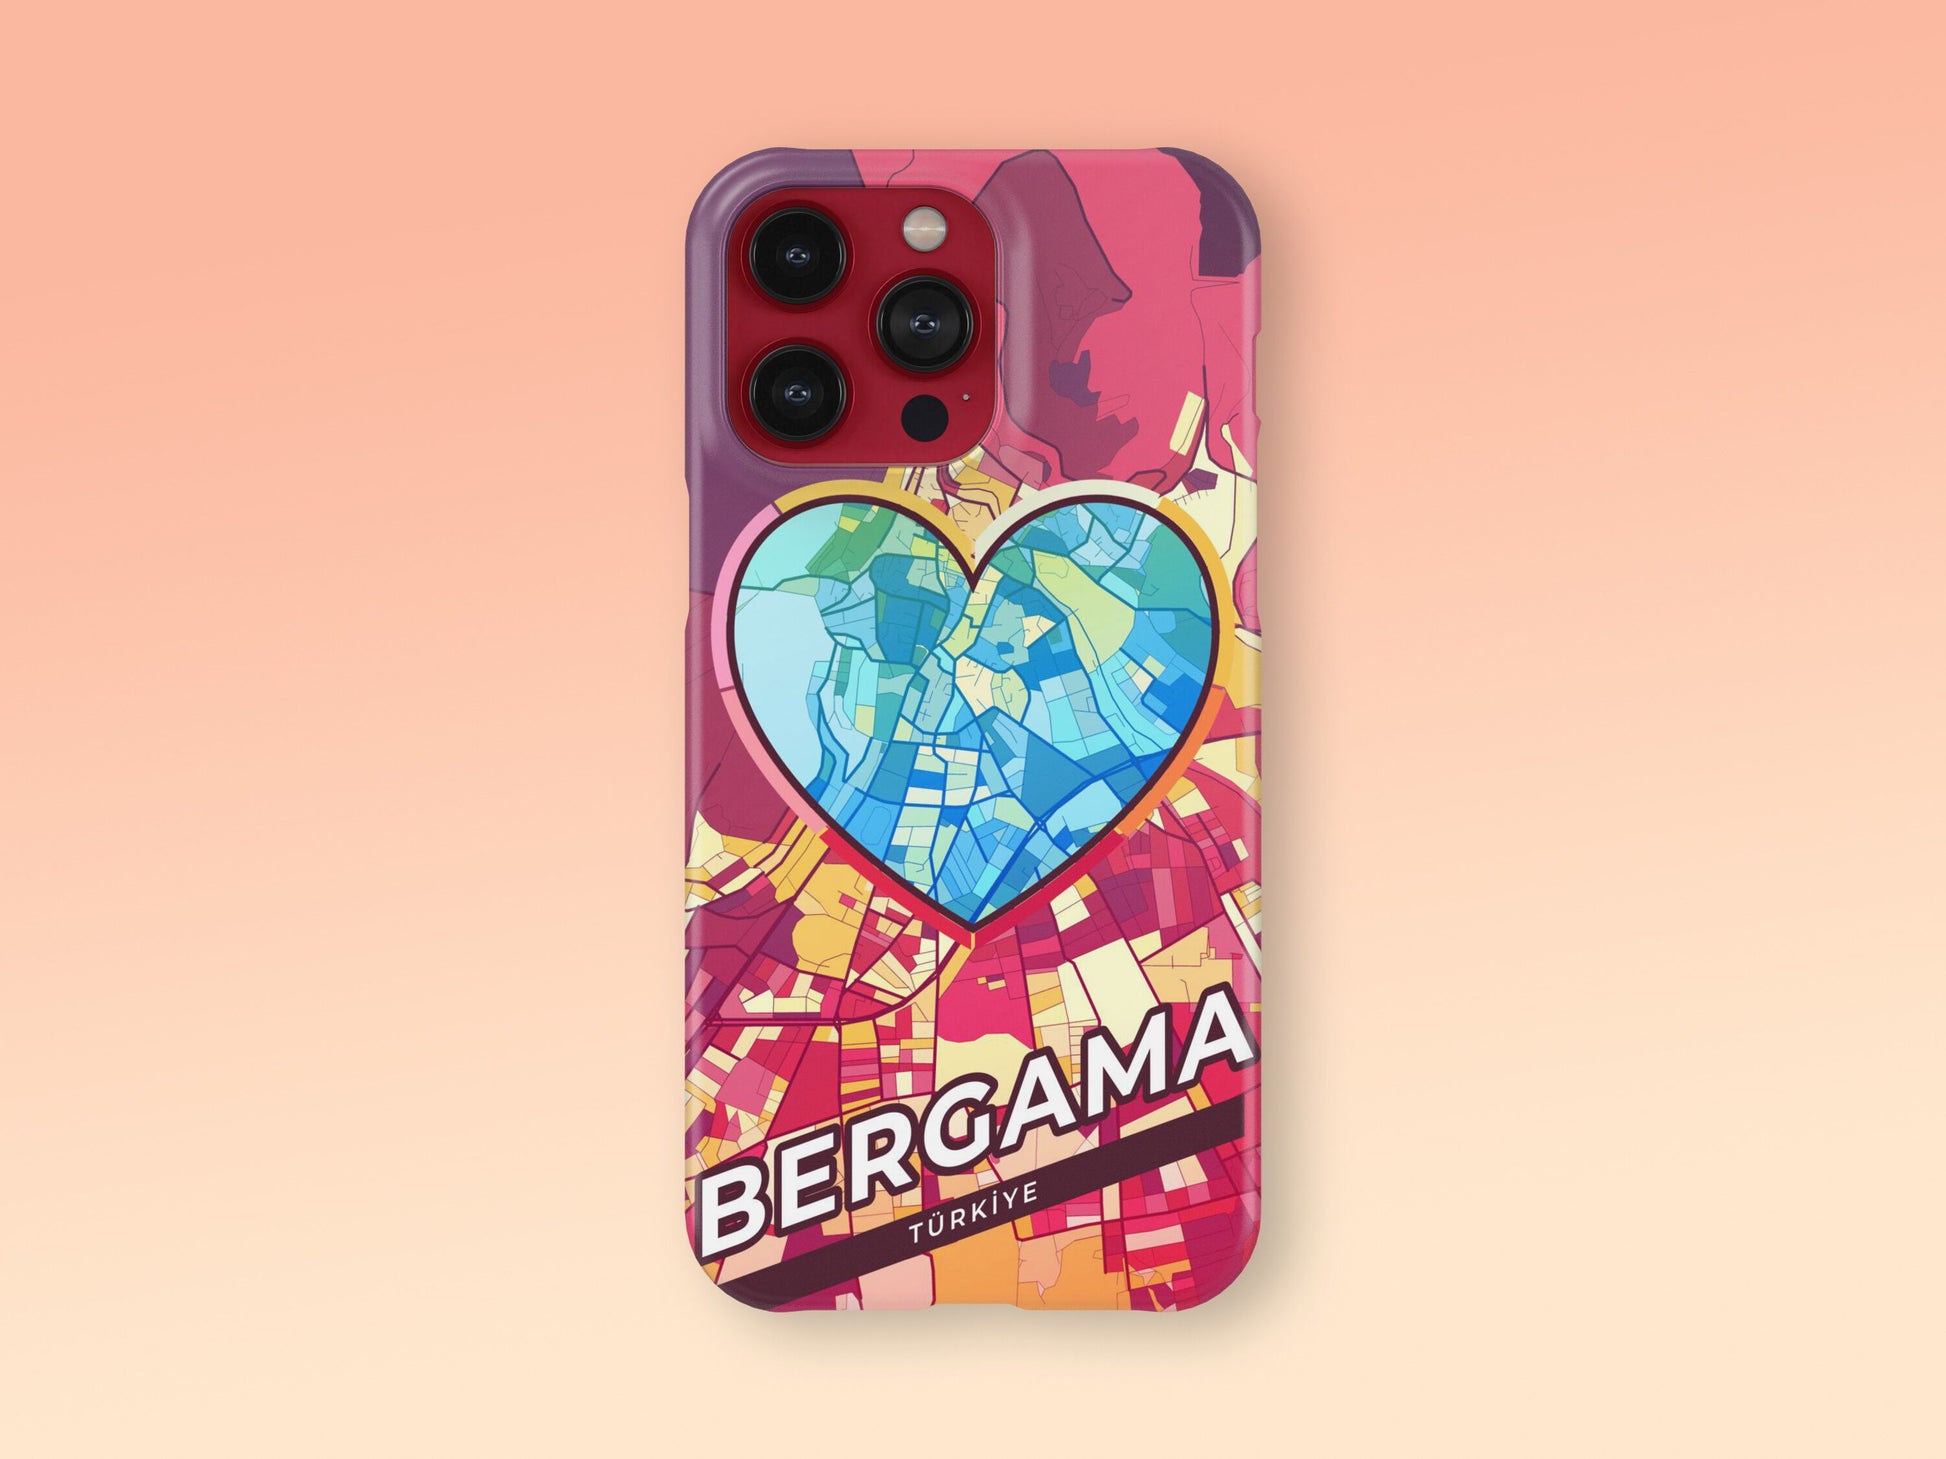 Bergama Turkey slim phone case with colorful icon. Birthday, wedding or housewarming gift. Couple match cases. 2